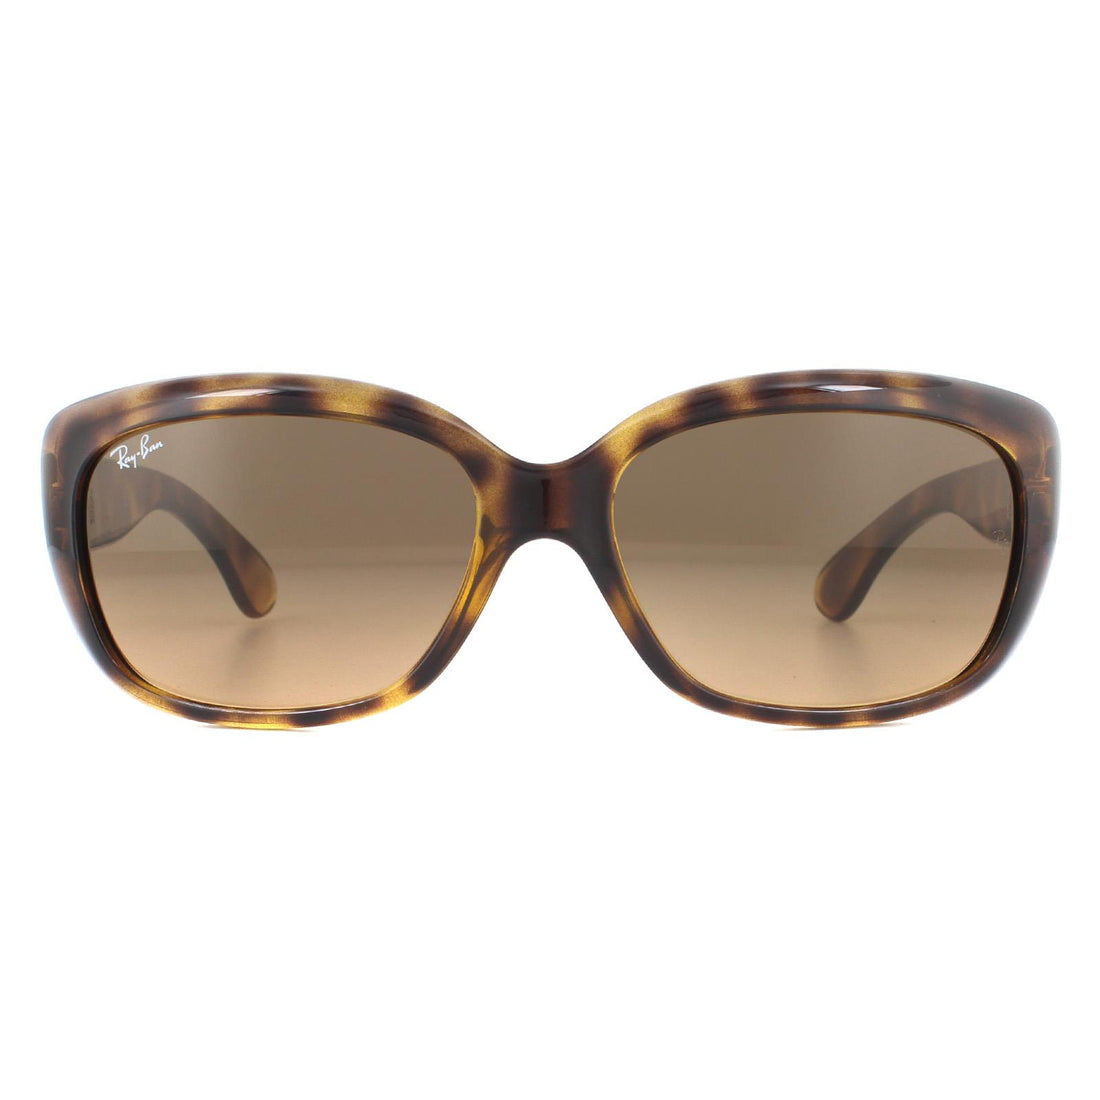 Ray-Ban Sunglasses Jackie Ohh RB4101 642/43 Havana Light Brown Black Gradient